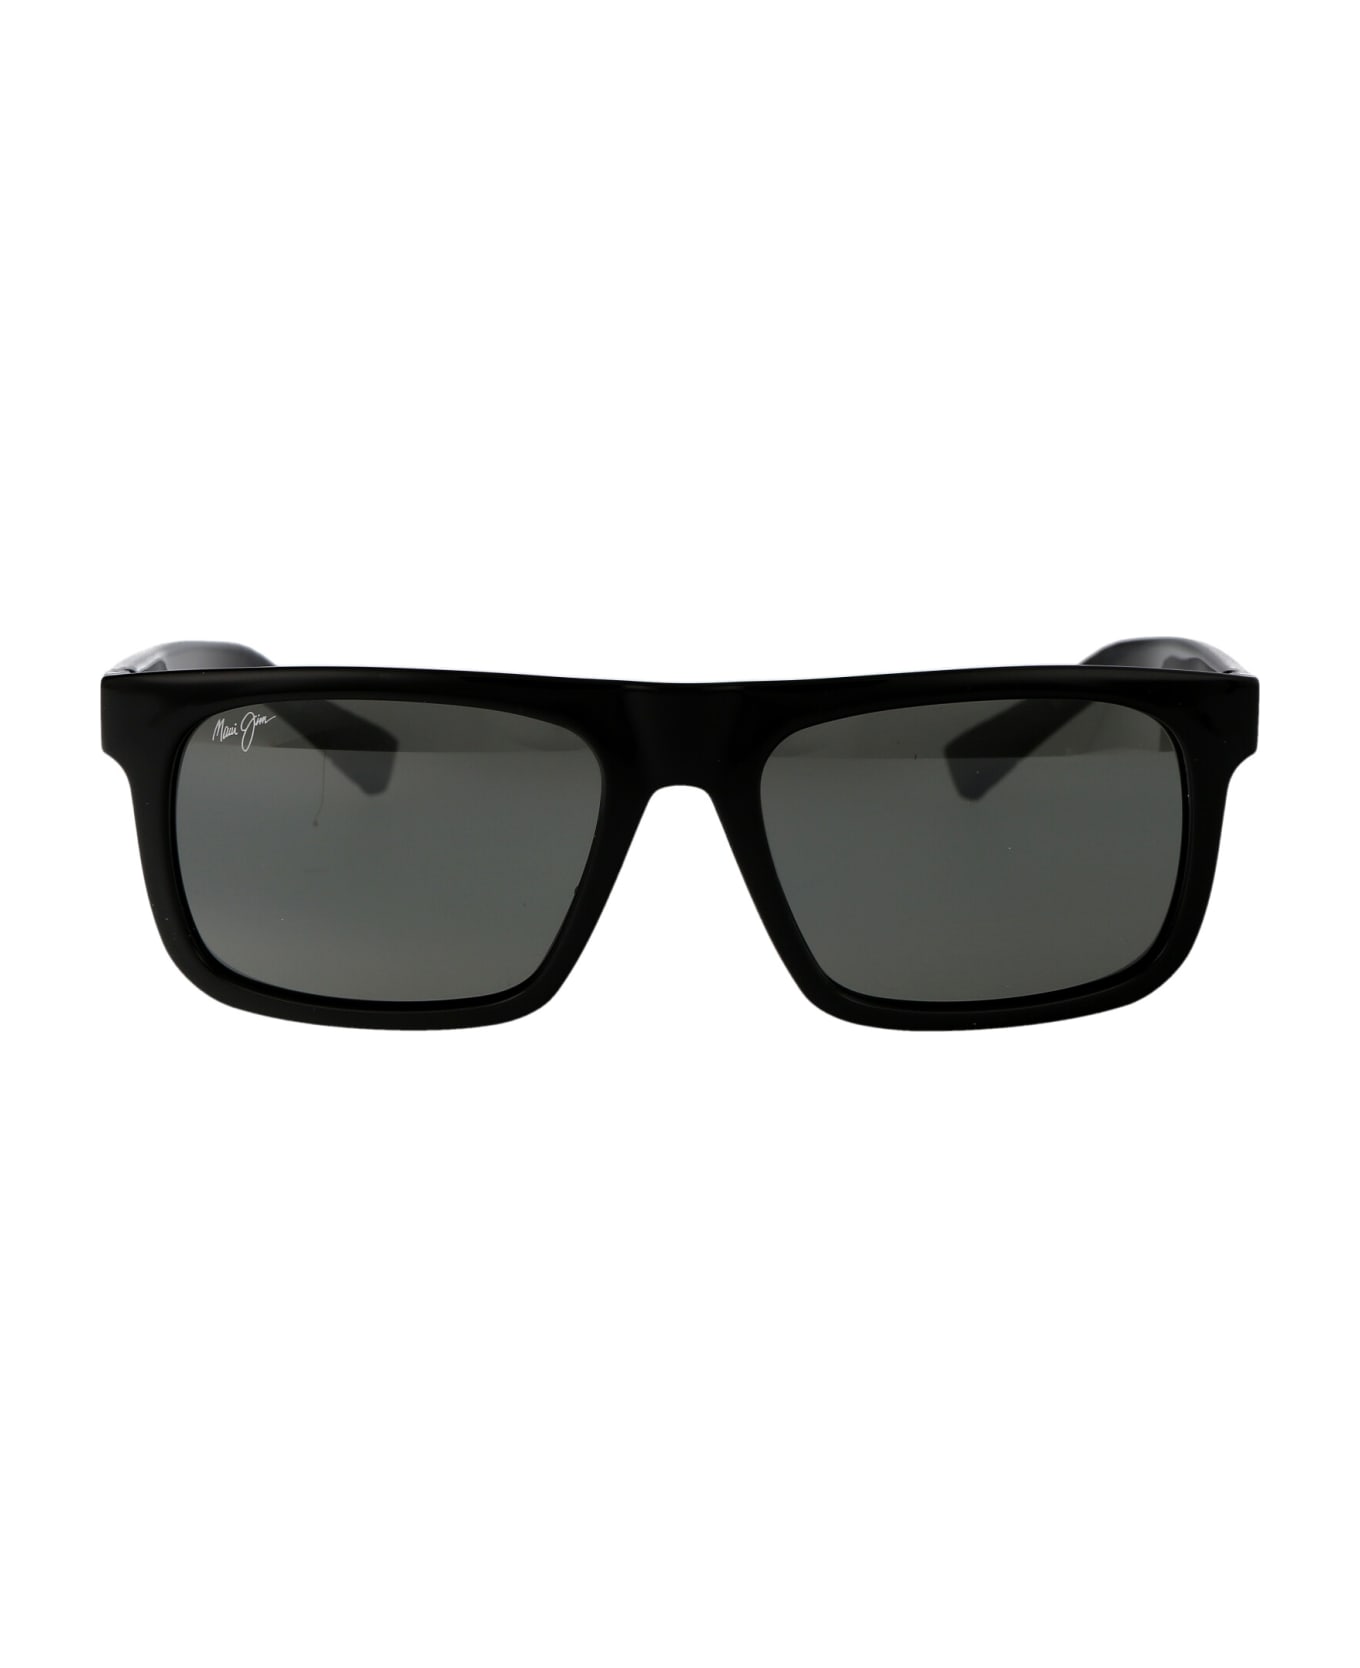 Maui Jim Opio Sunglasses - 002 GREY OPIO SHINY BLACK サングラス